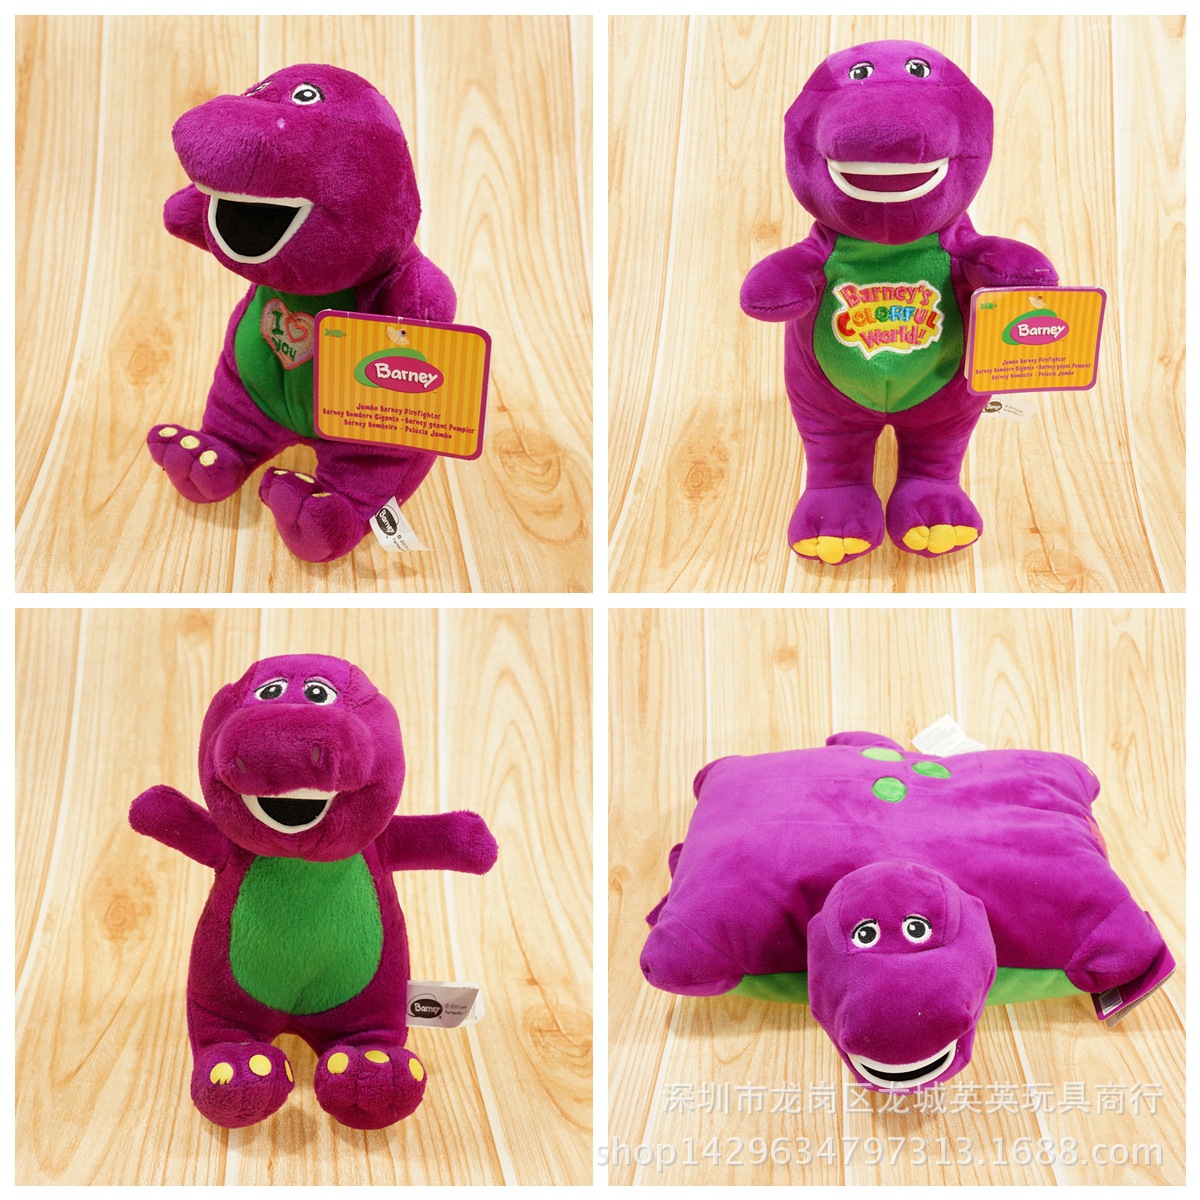 Banny purple little dinosaur Barney singing, pillow, yellow green